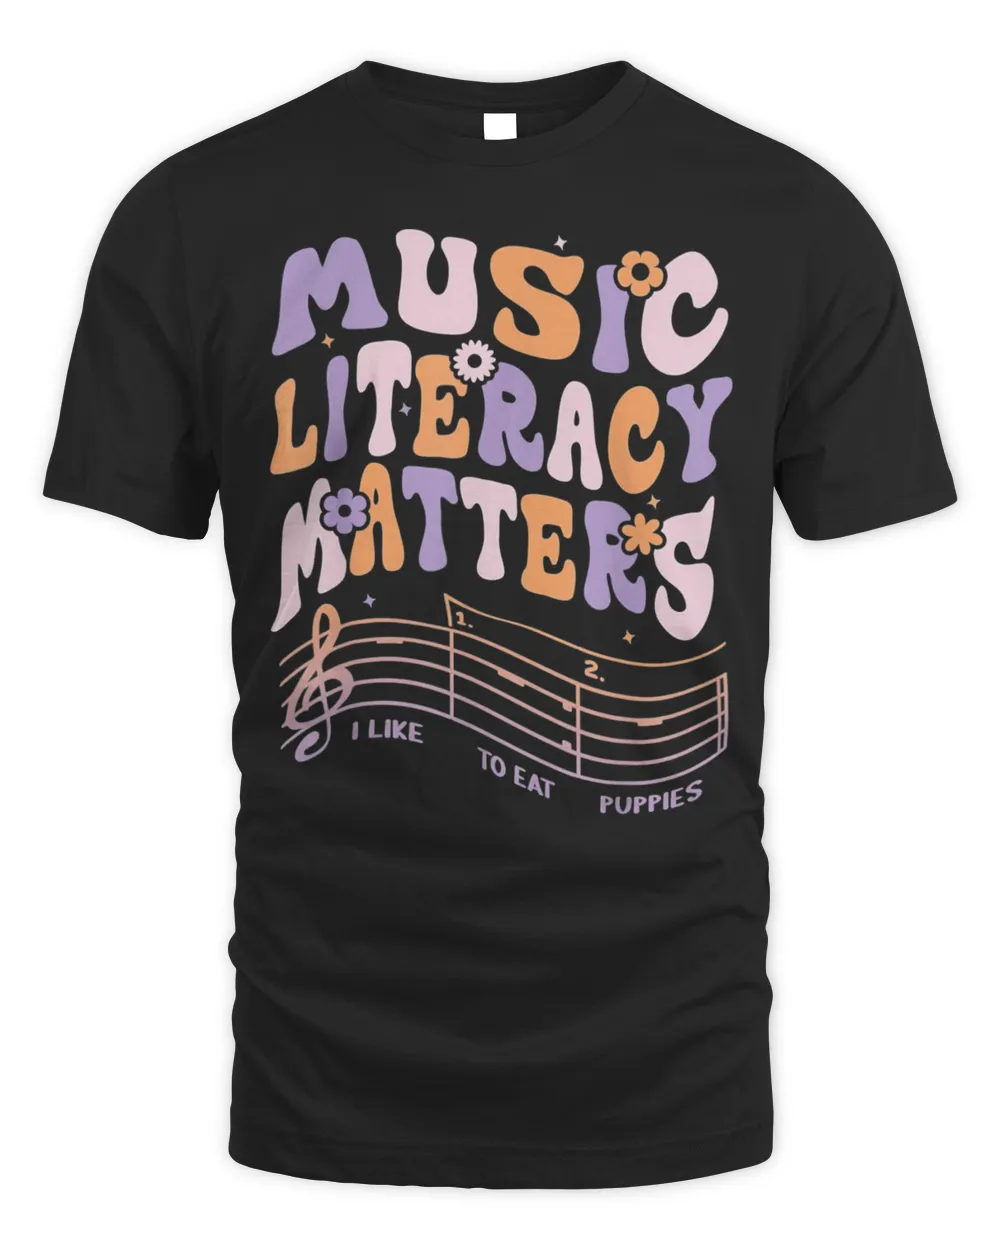 Music Literacy Matters I Like To Eat Puppies Music Meme girl Shirt